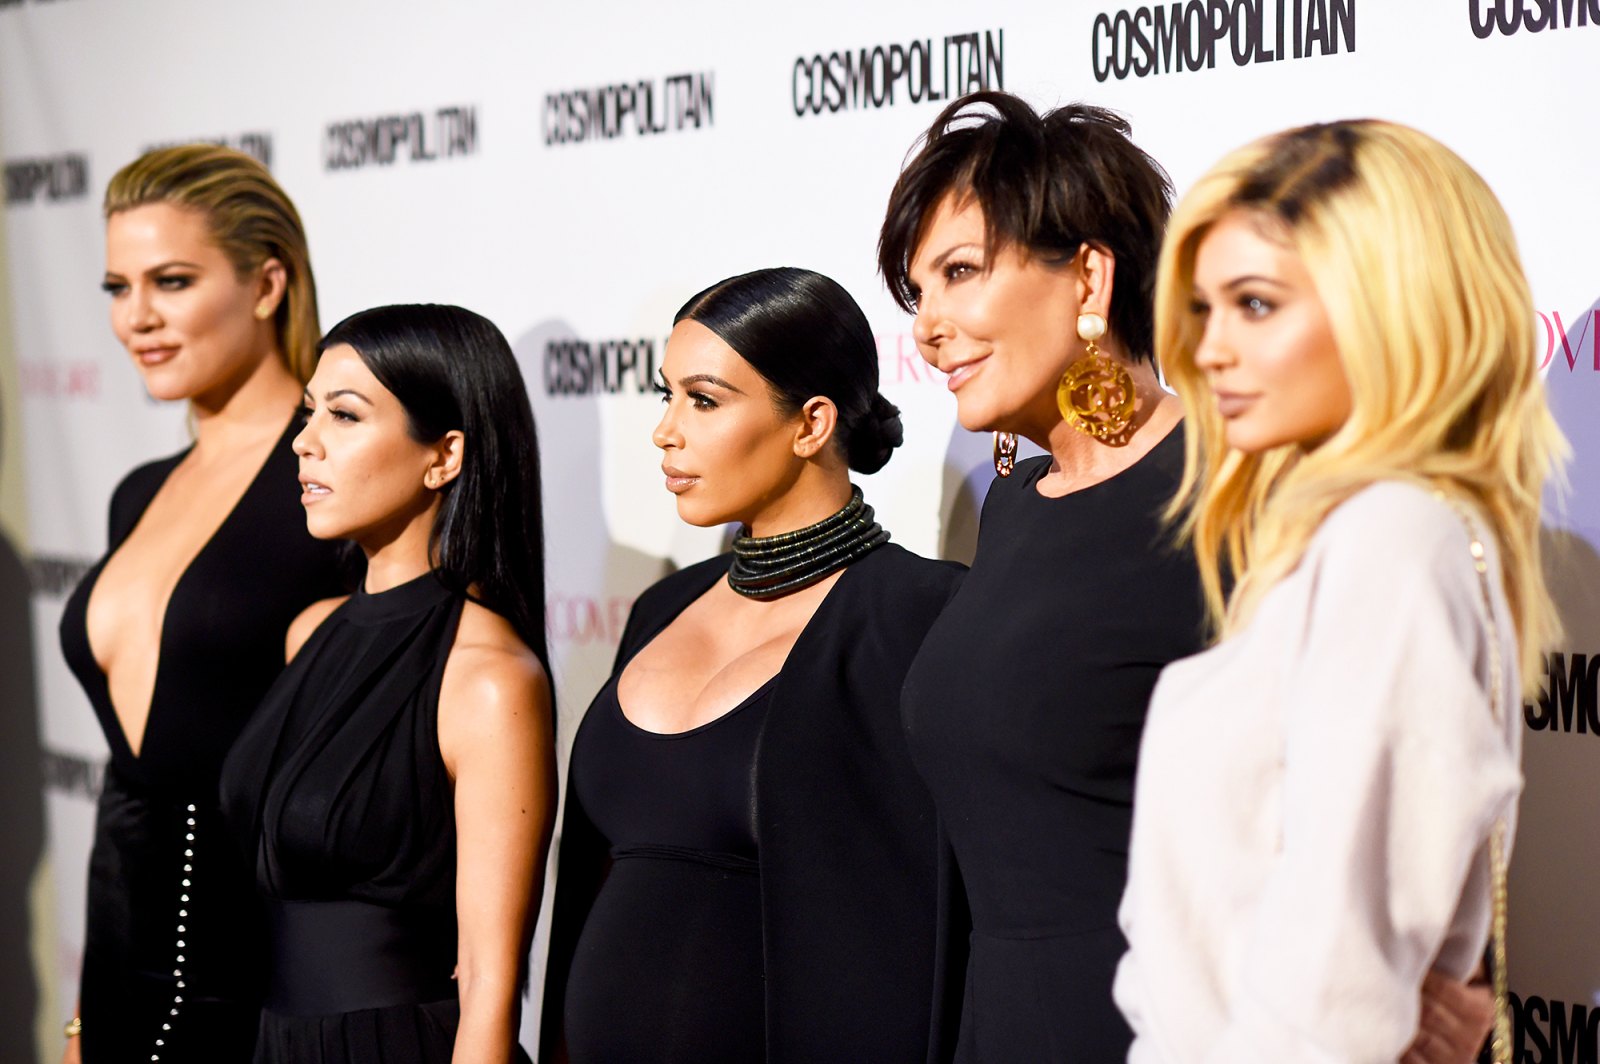 Khloe Kardashian, Kourtney Kardashian, Kim Kardashian, Kris Jenner and Kylie Jenner